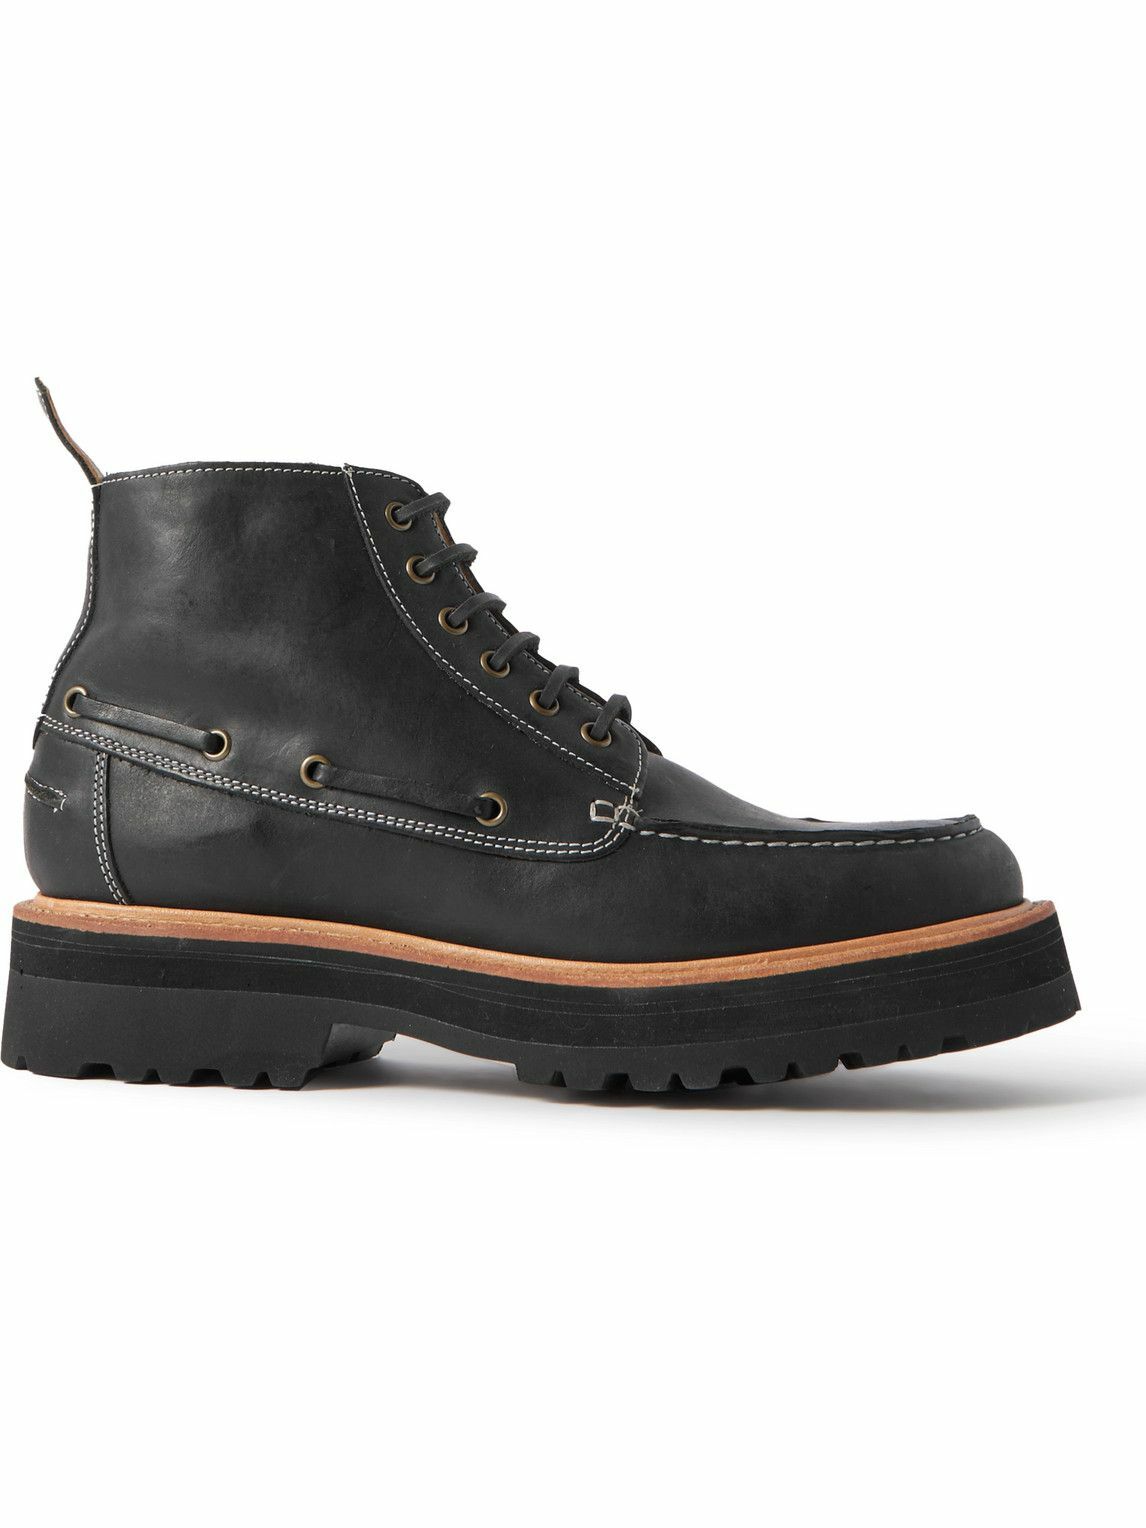 Grenson - Easton Leather Boots - Black Grenson